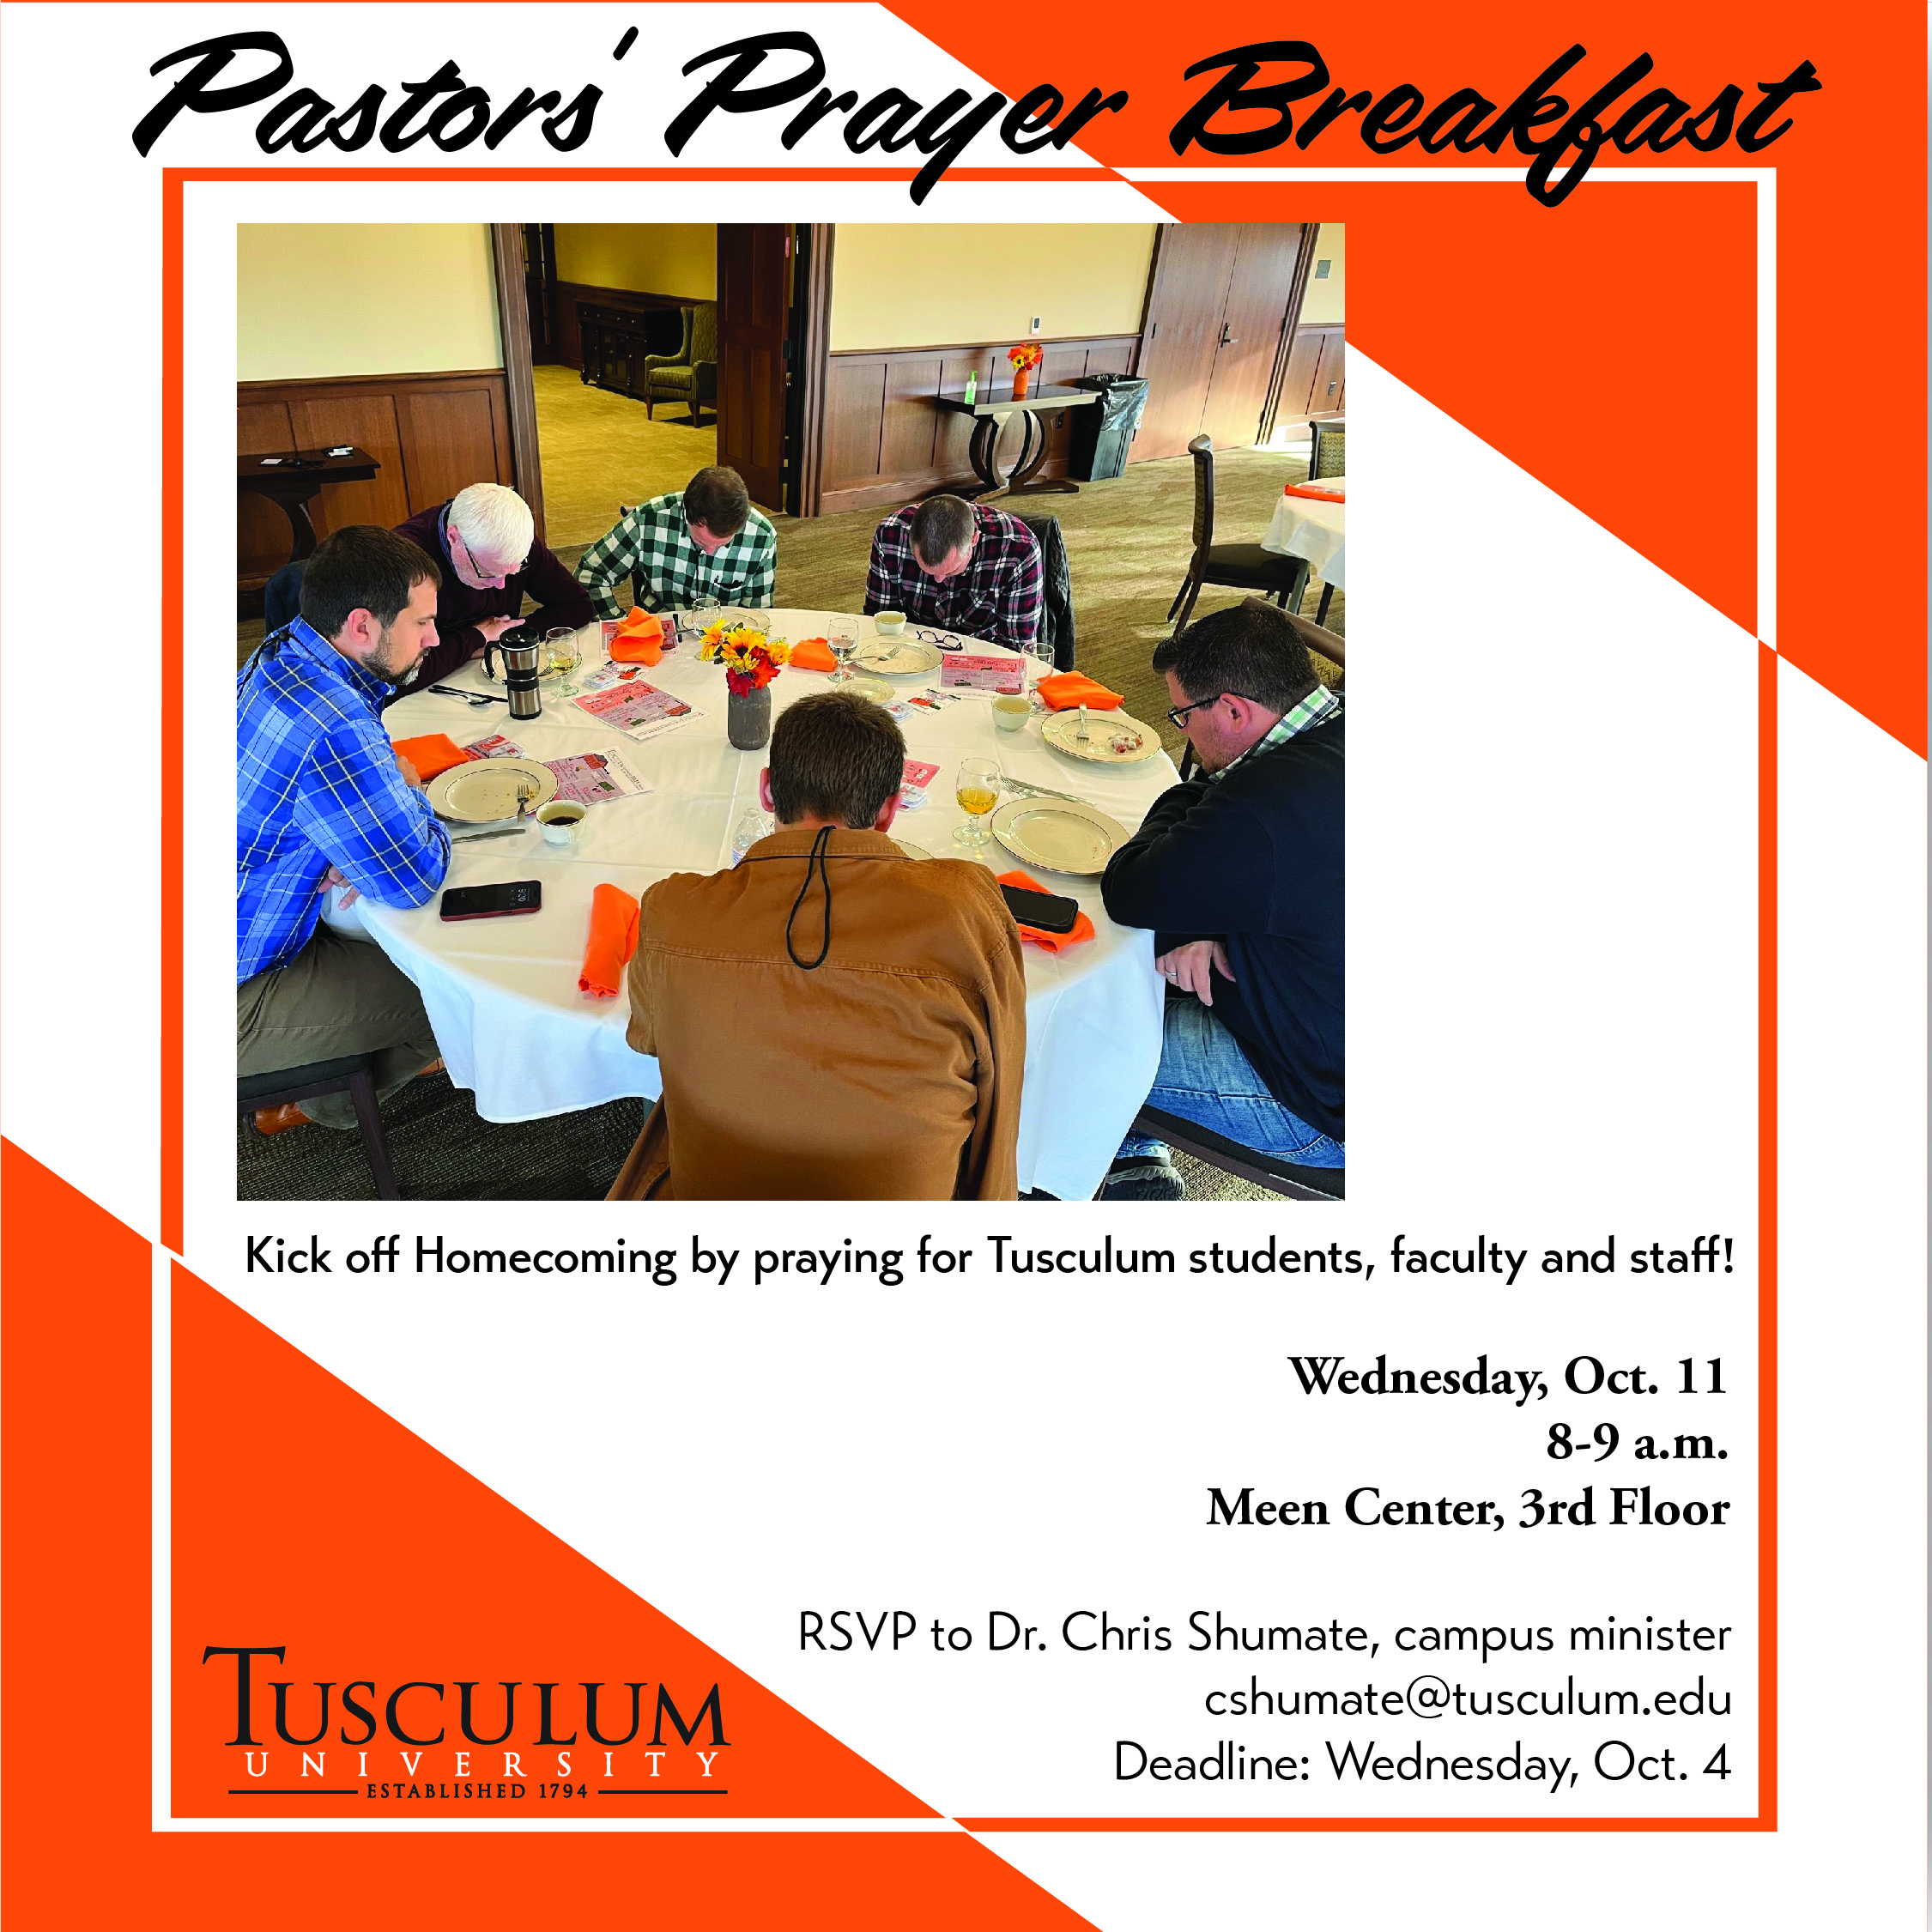 Pastor Prayer Breakfast flyer